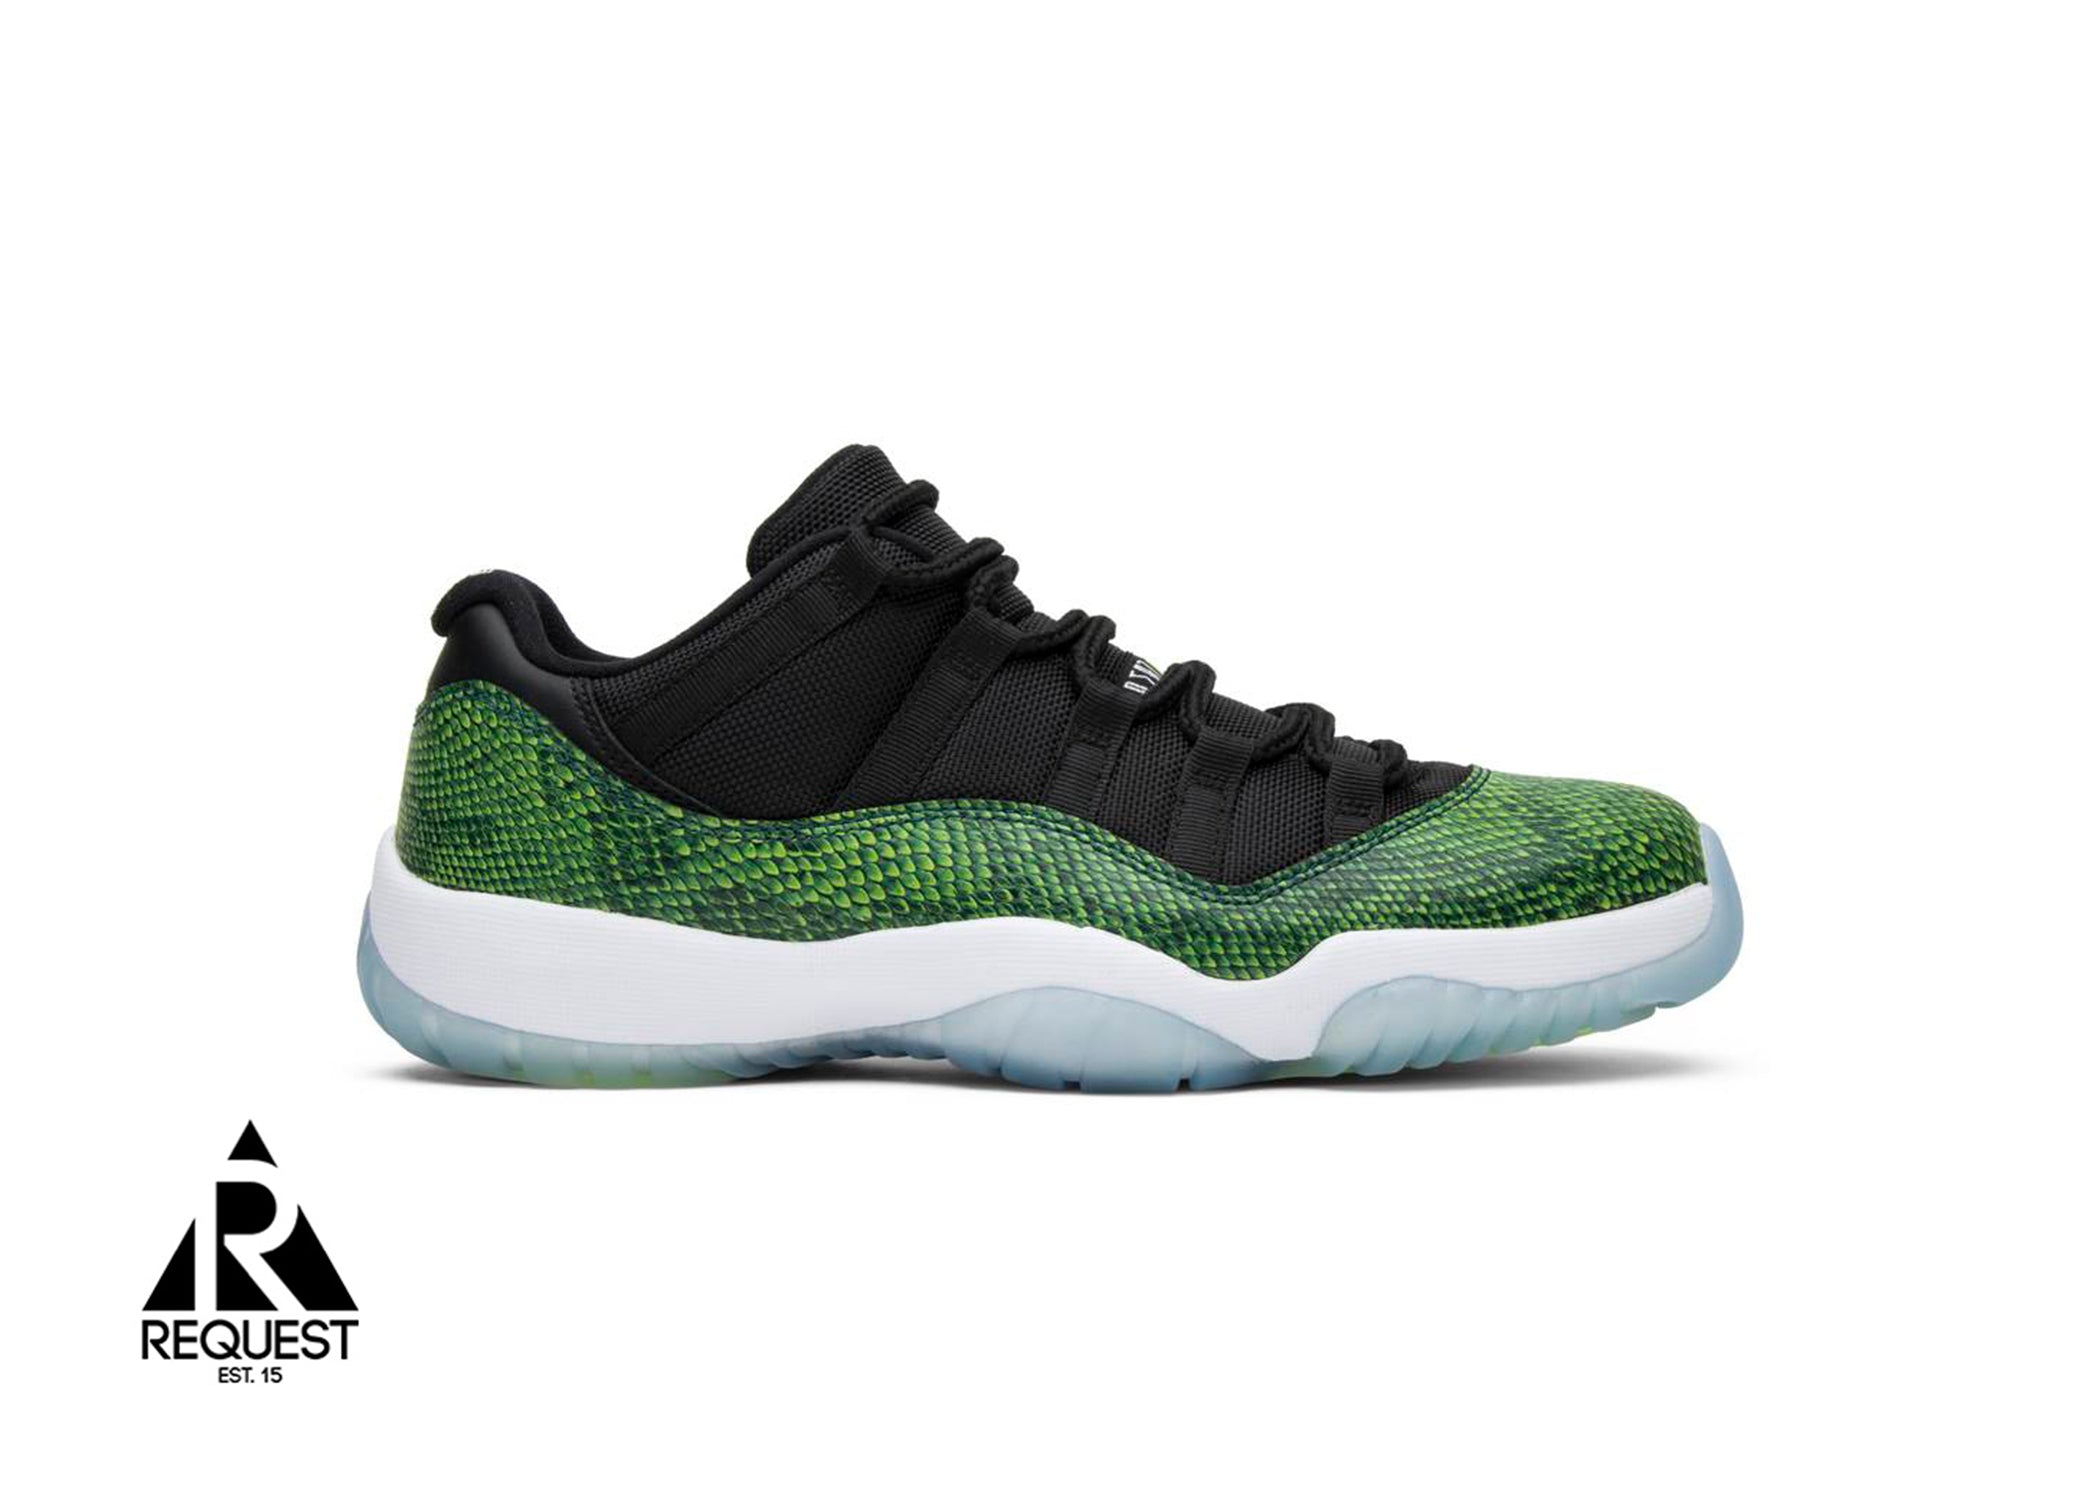 Air Jordan 11 Retro “Green Snakeskin”